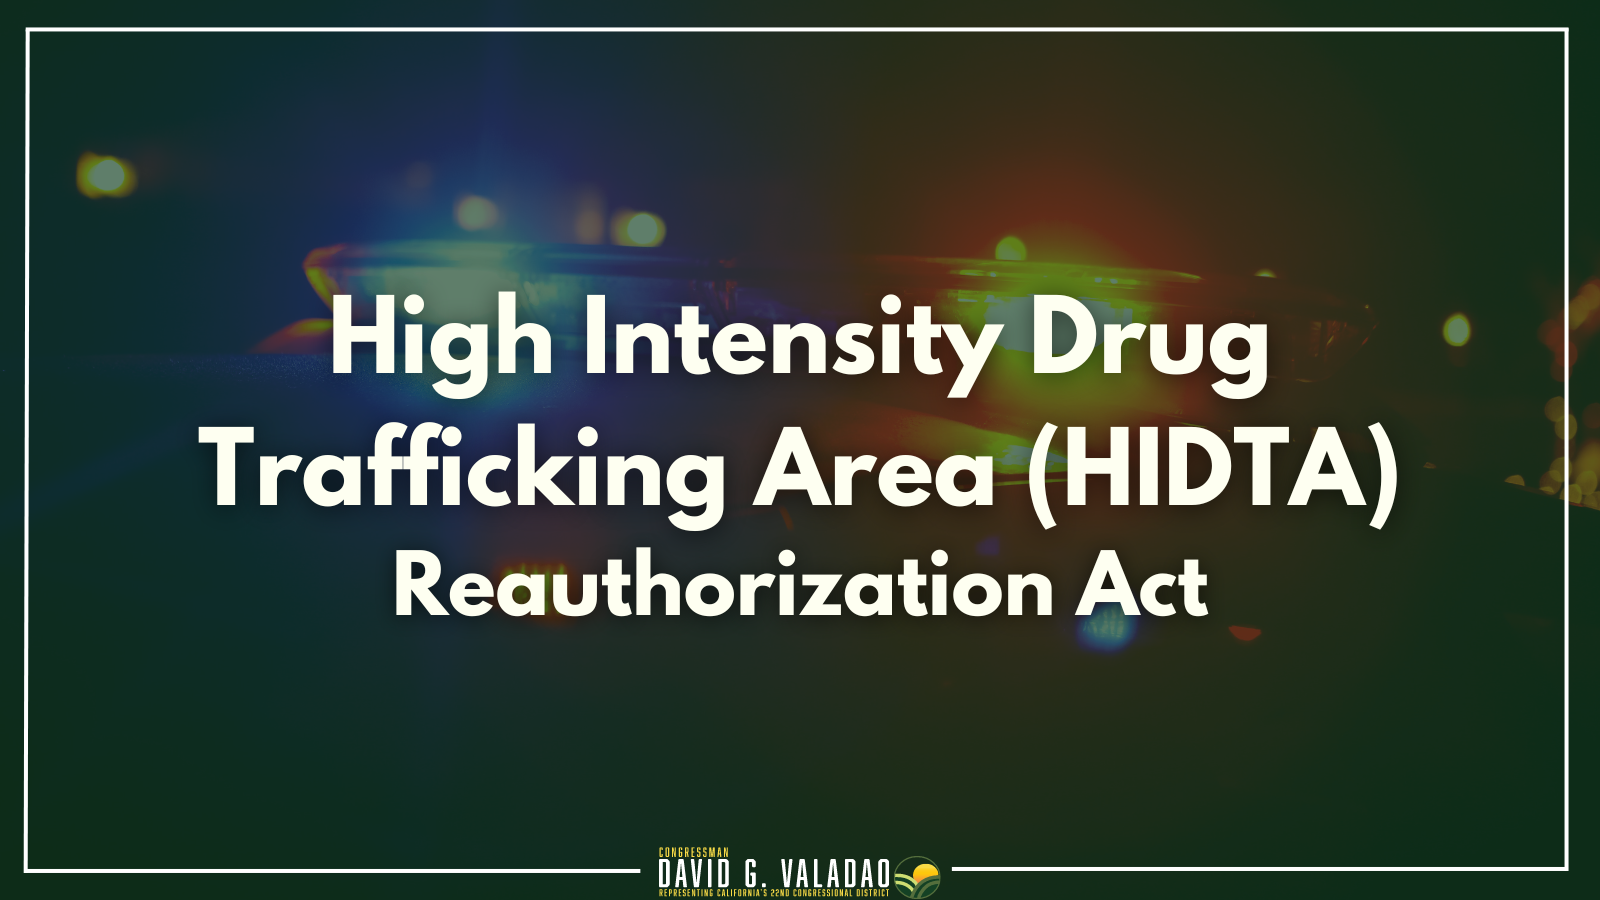 Rep. Valadao introduces the HIDTA Reauthorization Act